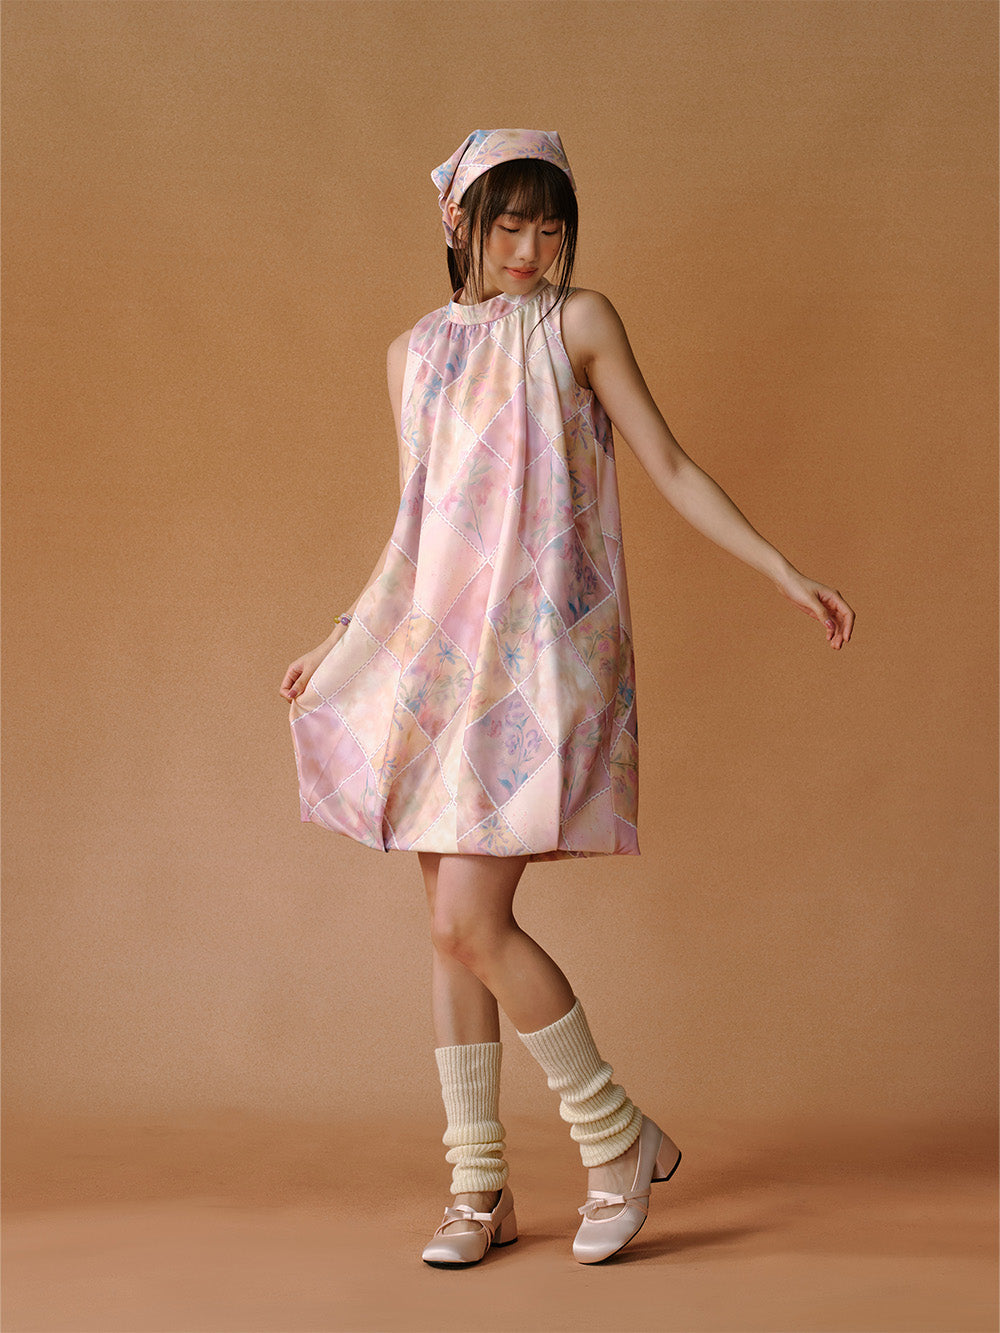 MUKTANK x LOUMUTAKU Youthful Plaid Pattern with Floral Ombre Halter-neck Dress